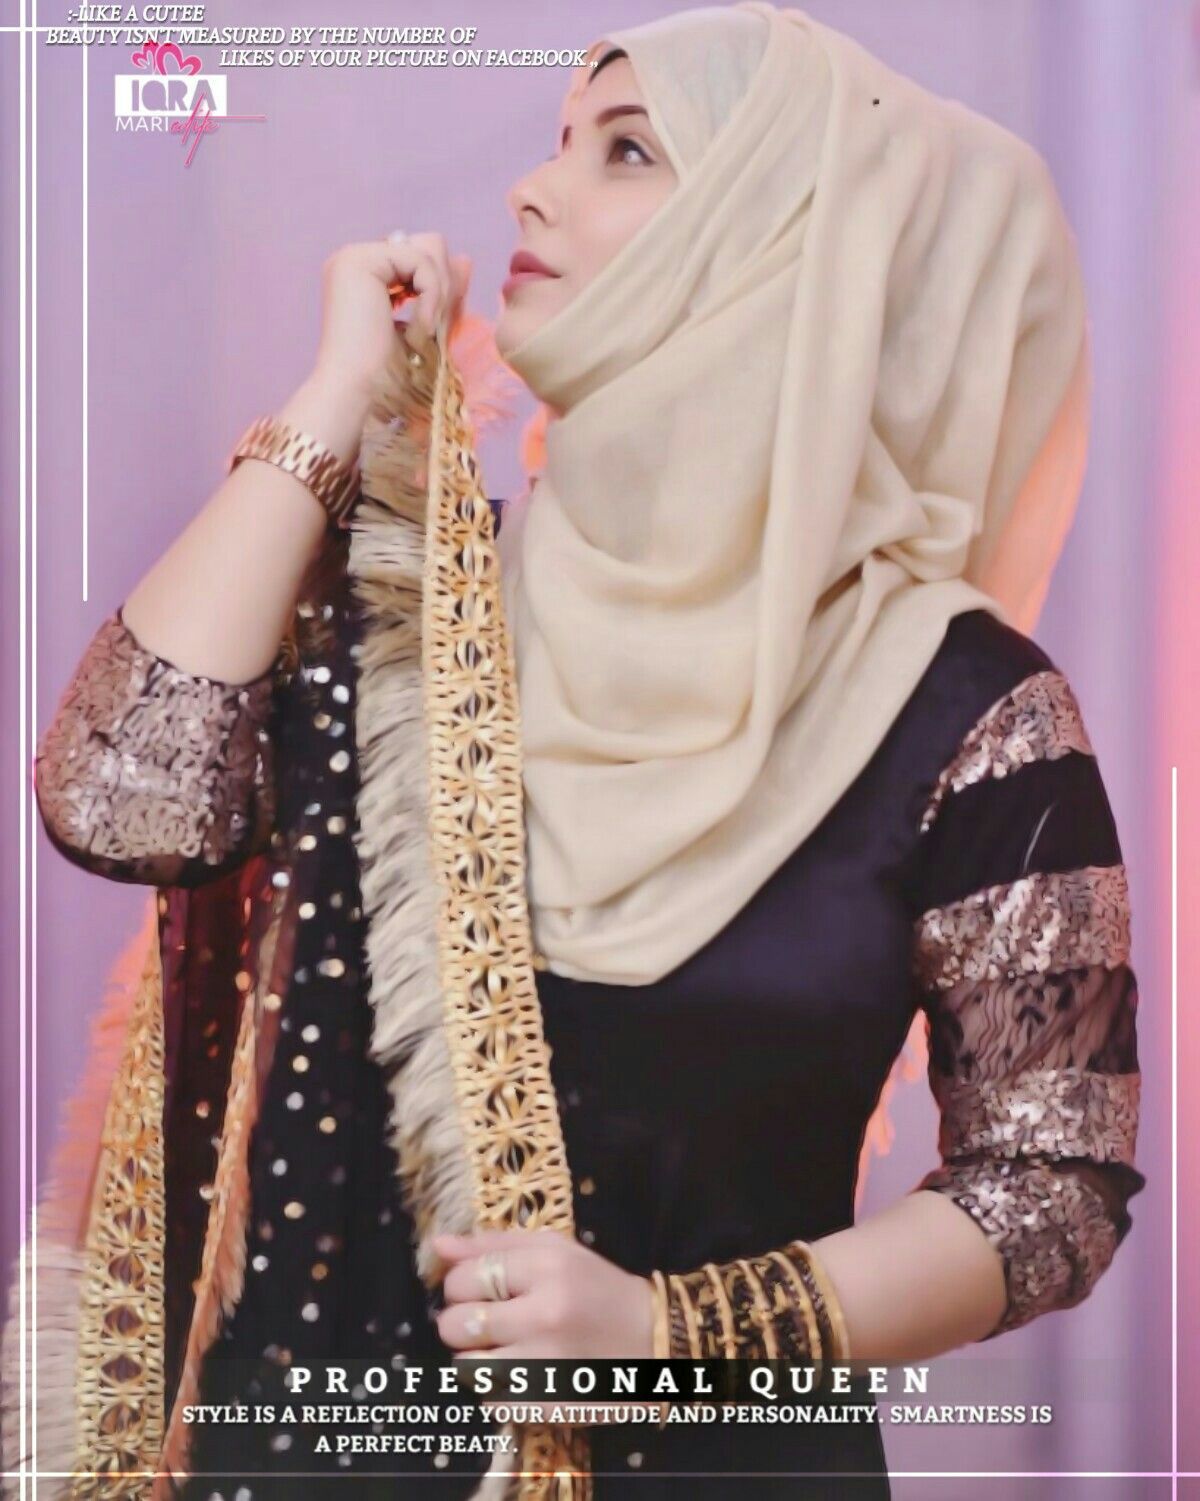 Islamic dpz. Islamic girl image, Islamic girl, Stylish girl image